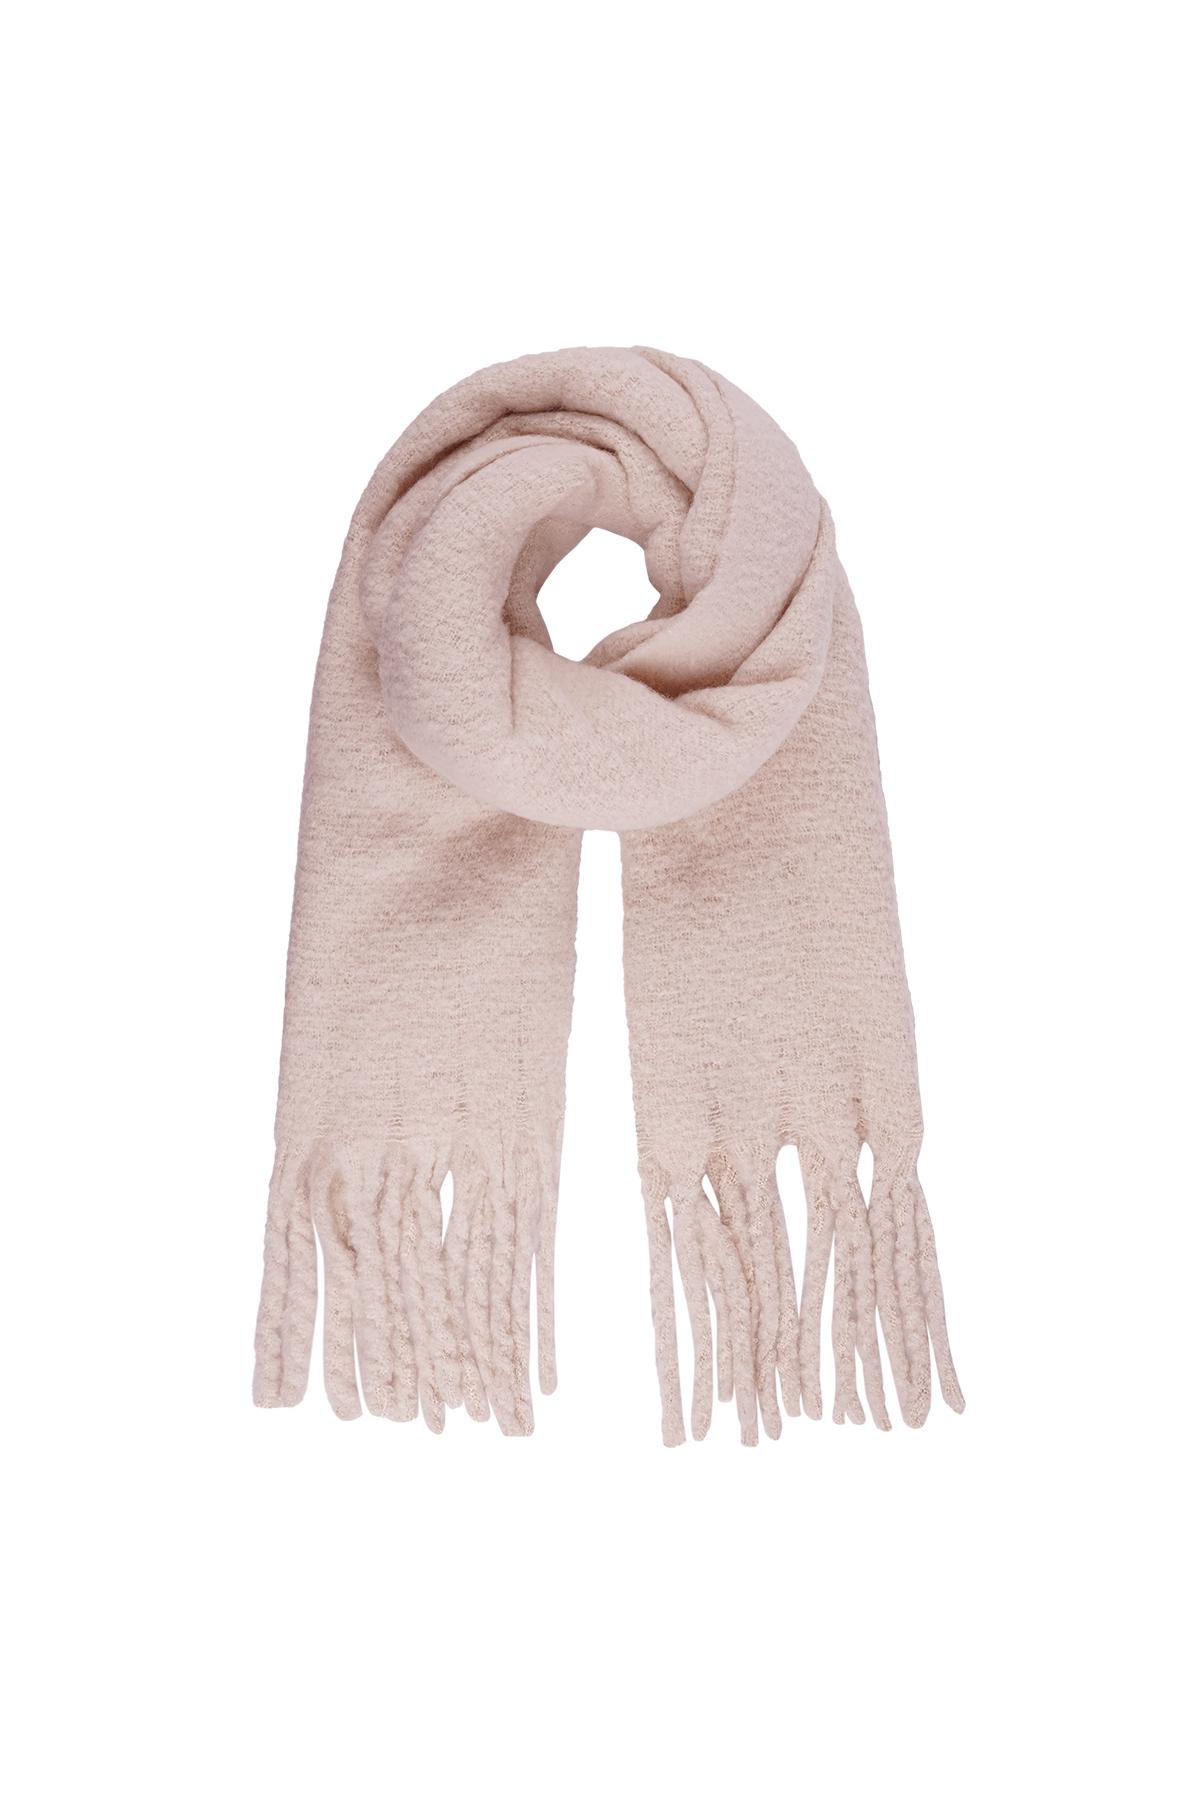 Calda sciarpa invernale tinta unita rosa chiaro Pale Pink Polyester h5 